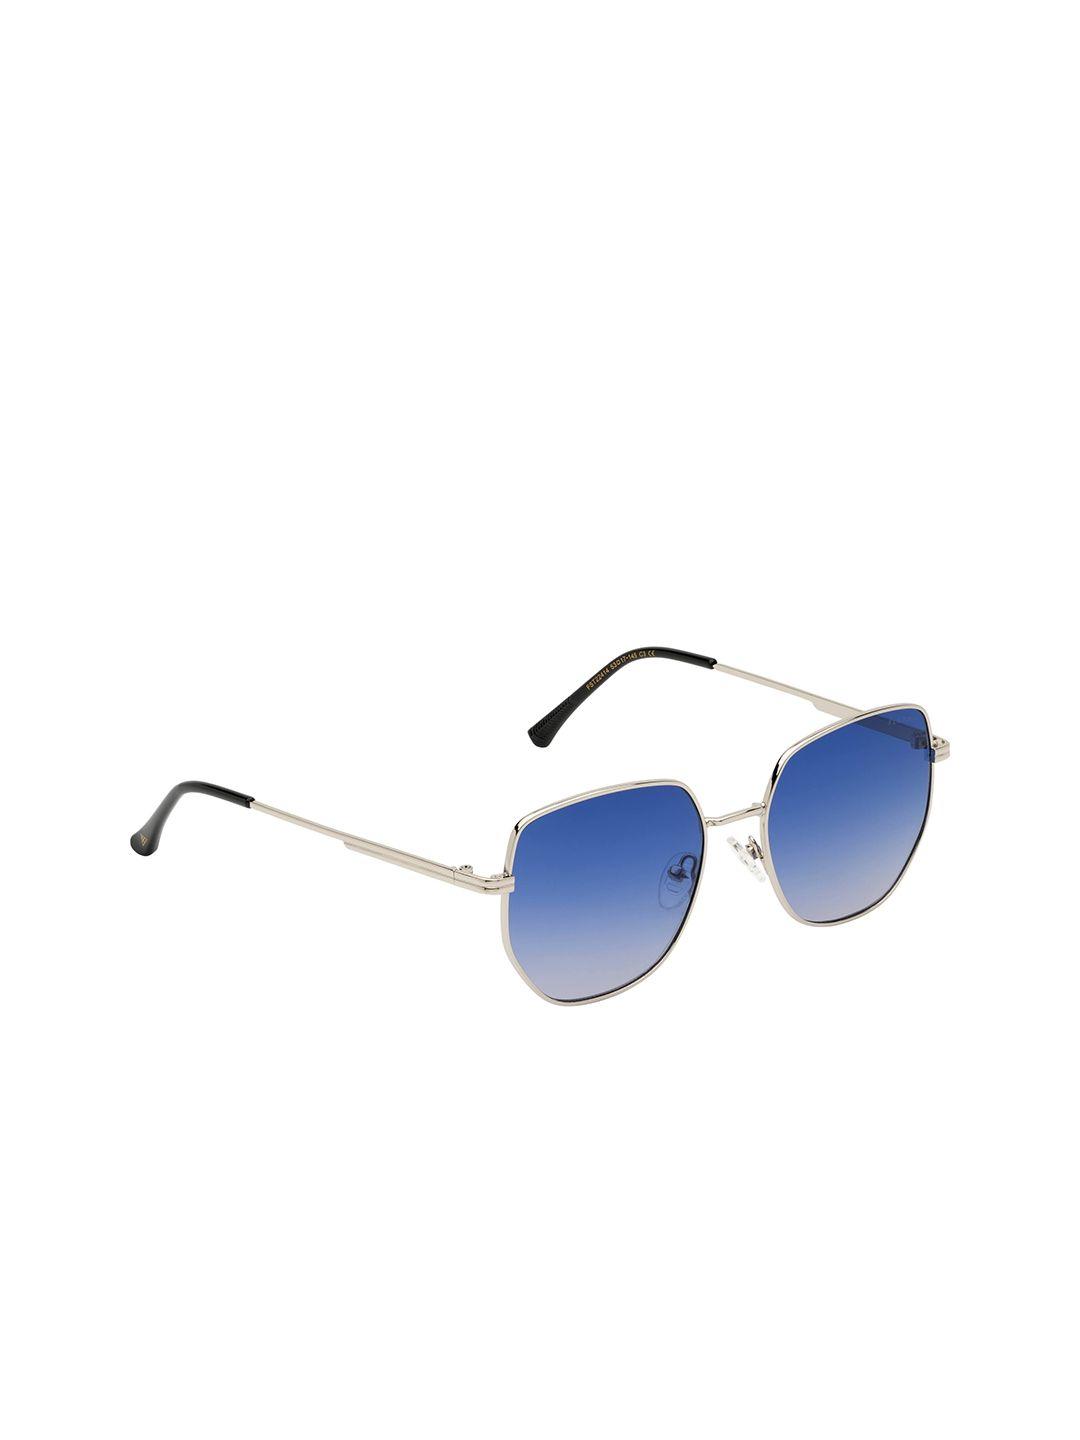 femina flaunt women blue lens & silver-toned sunglasses with polarised lens fst 22414 c3